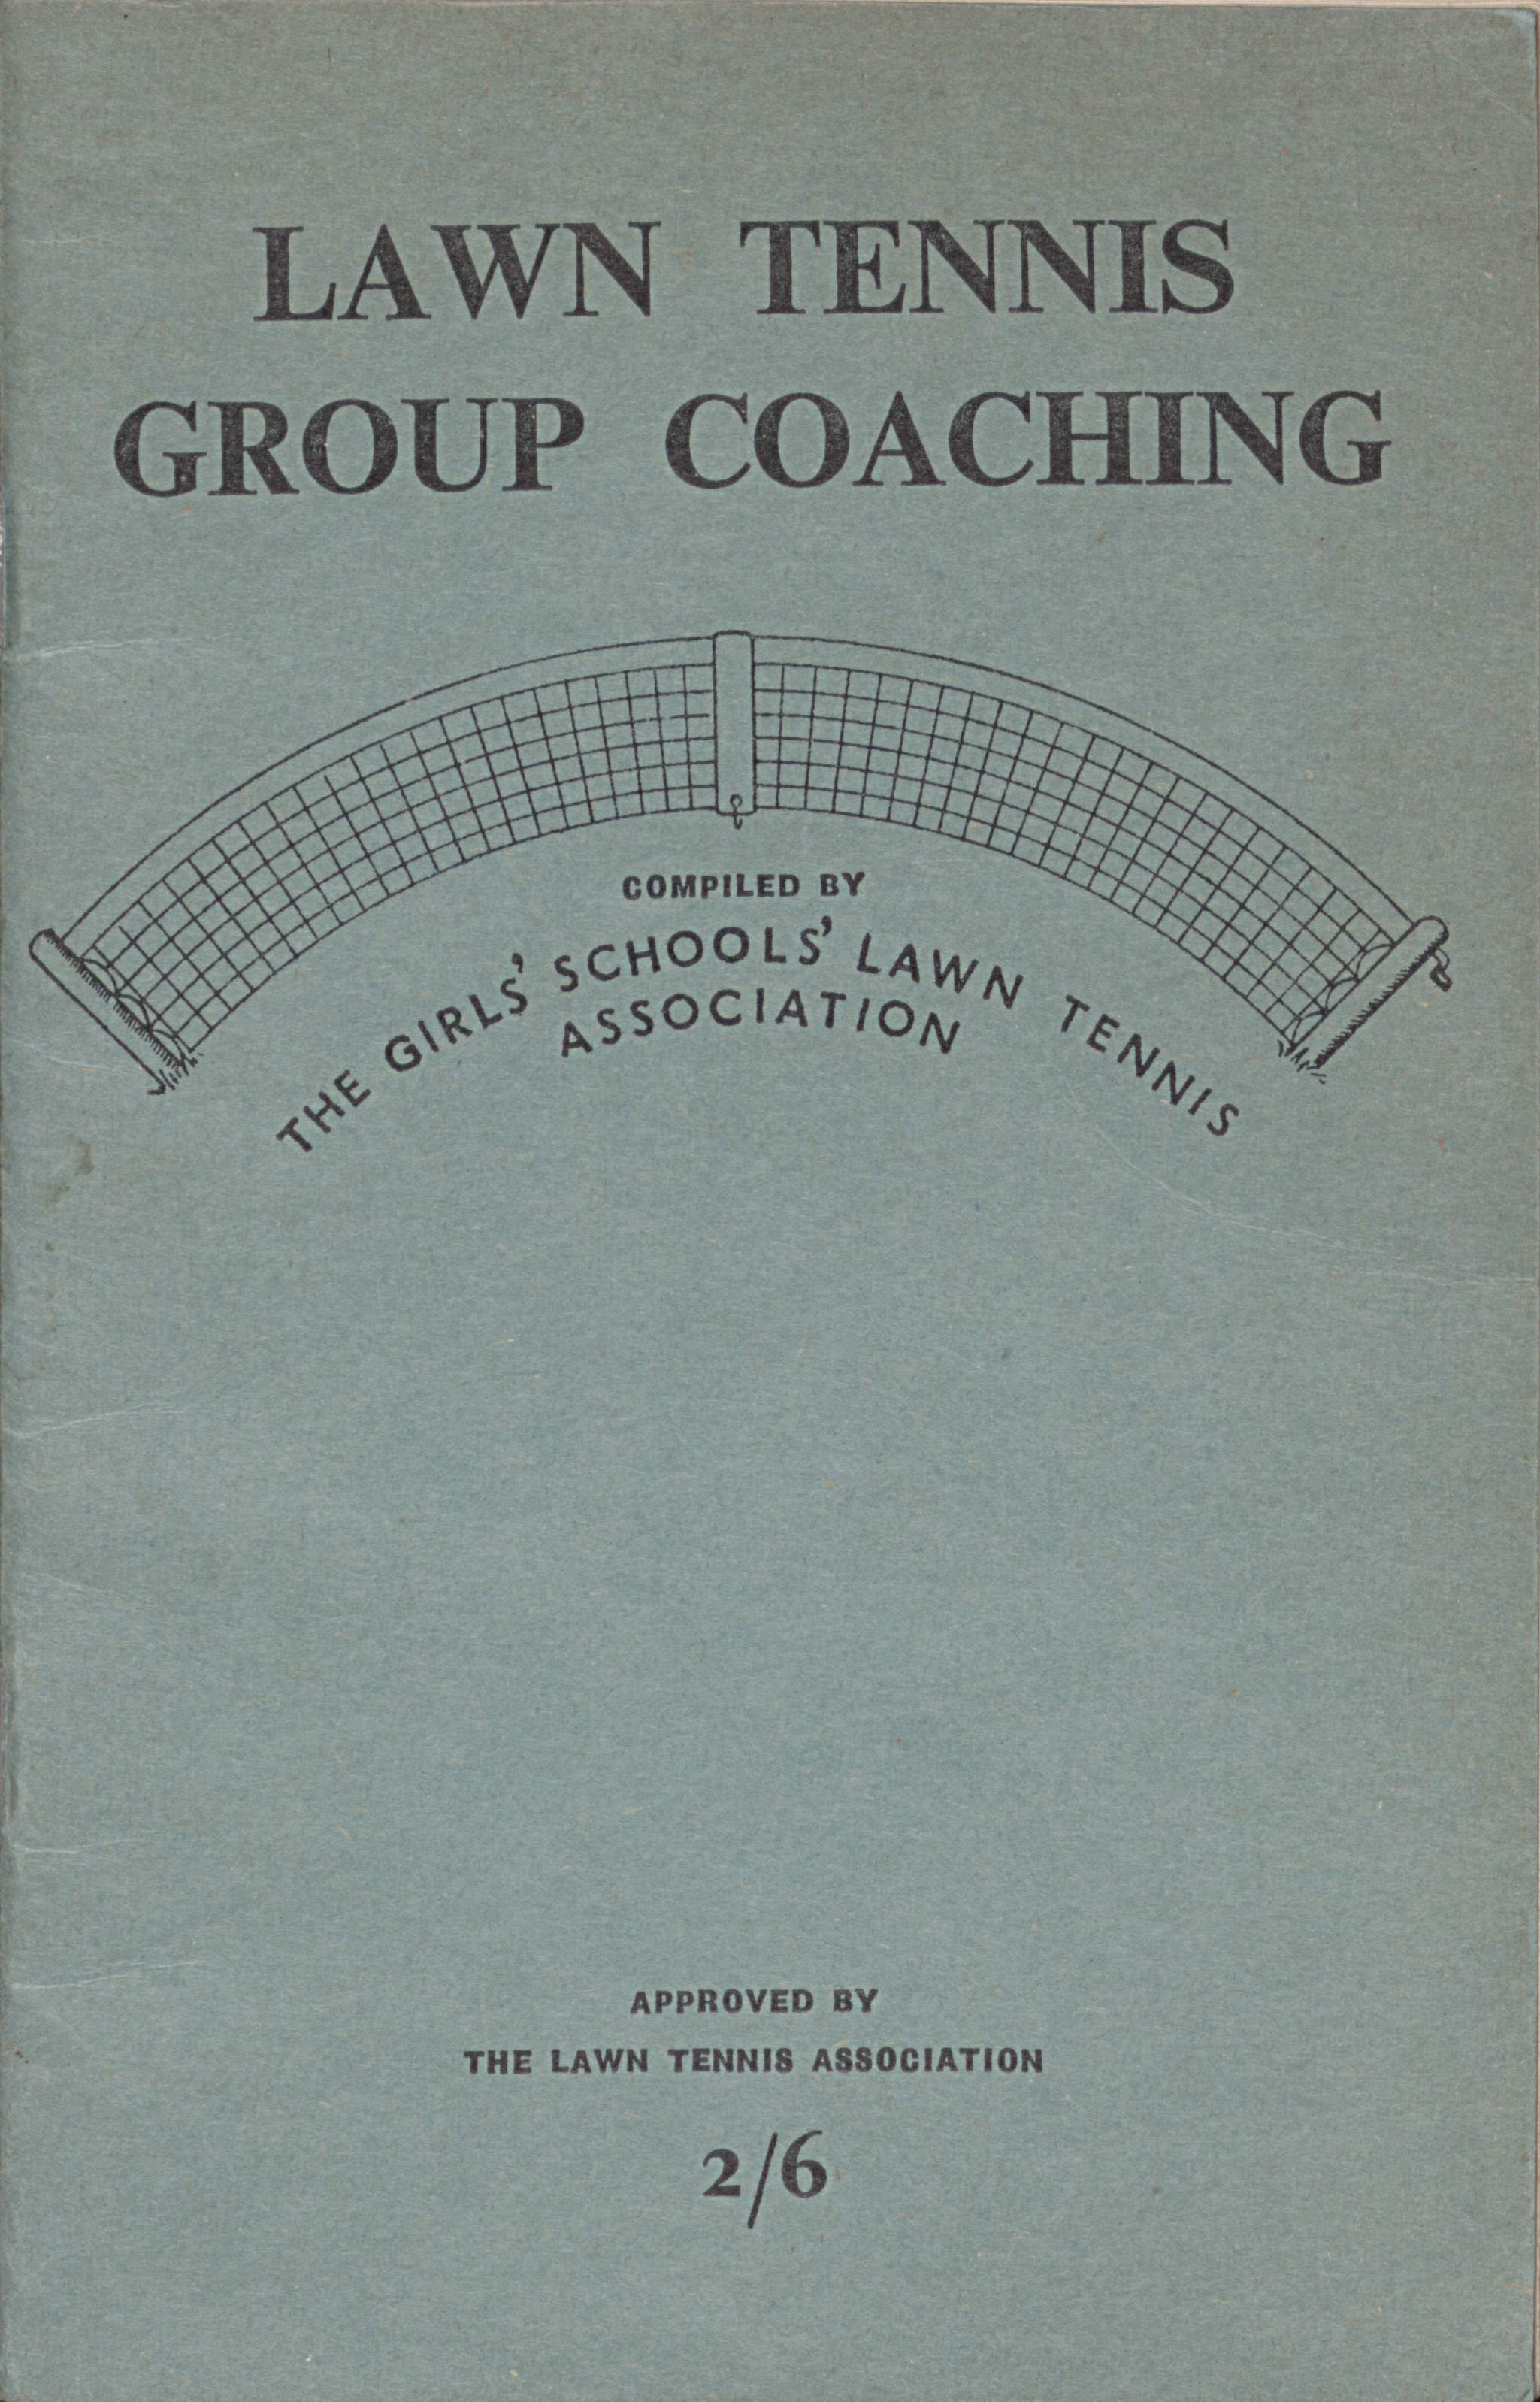 Lawn Tennis Group Coaching